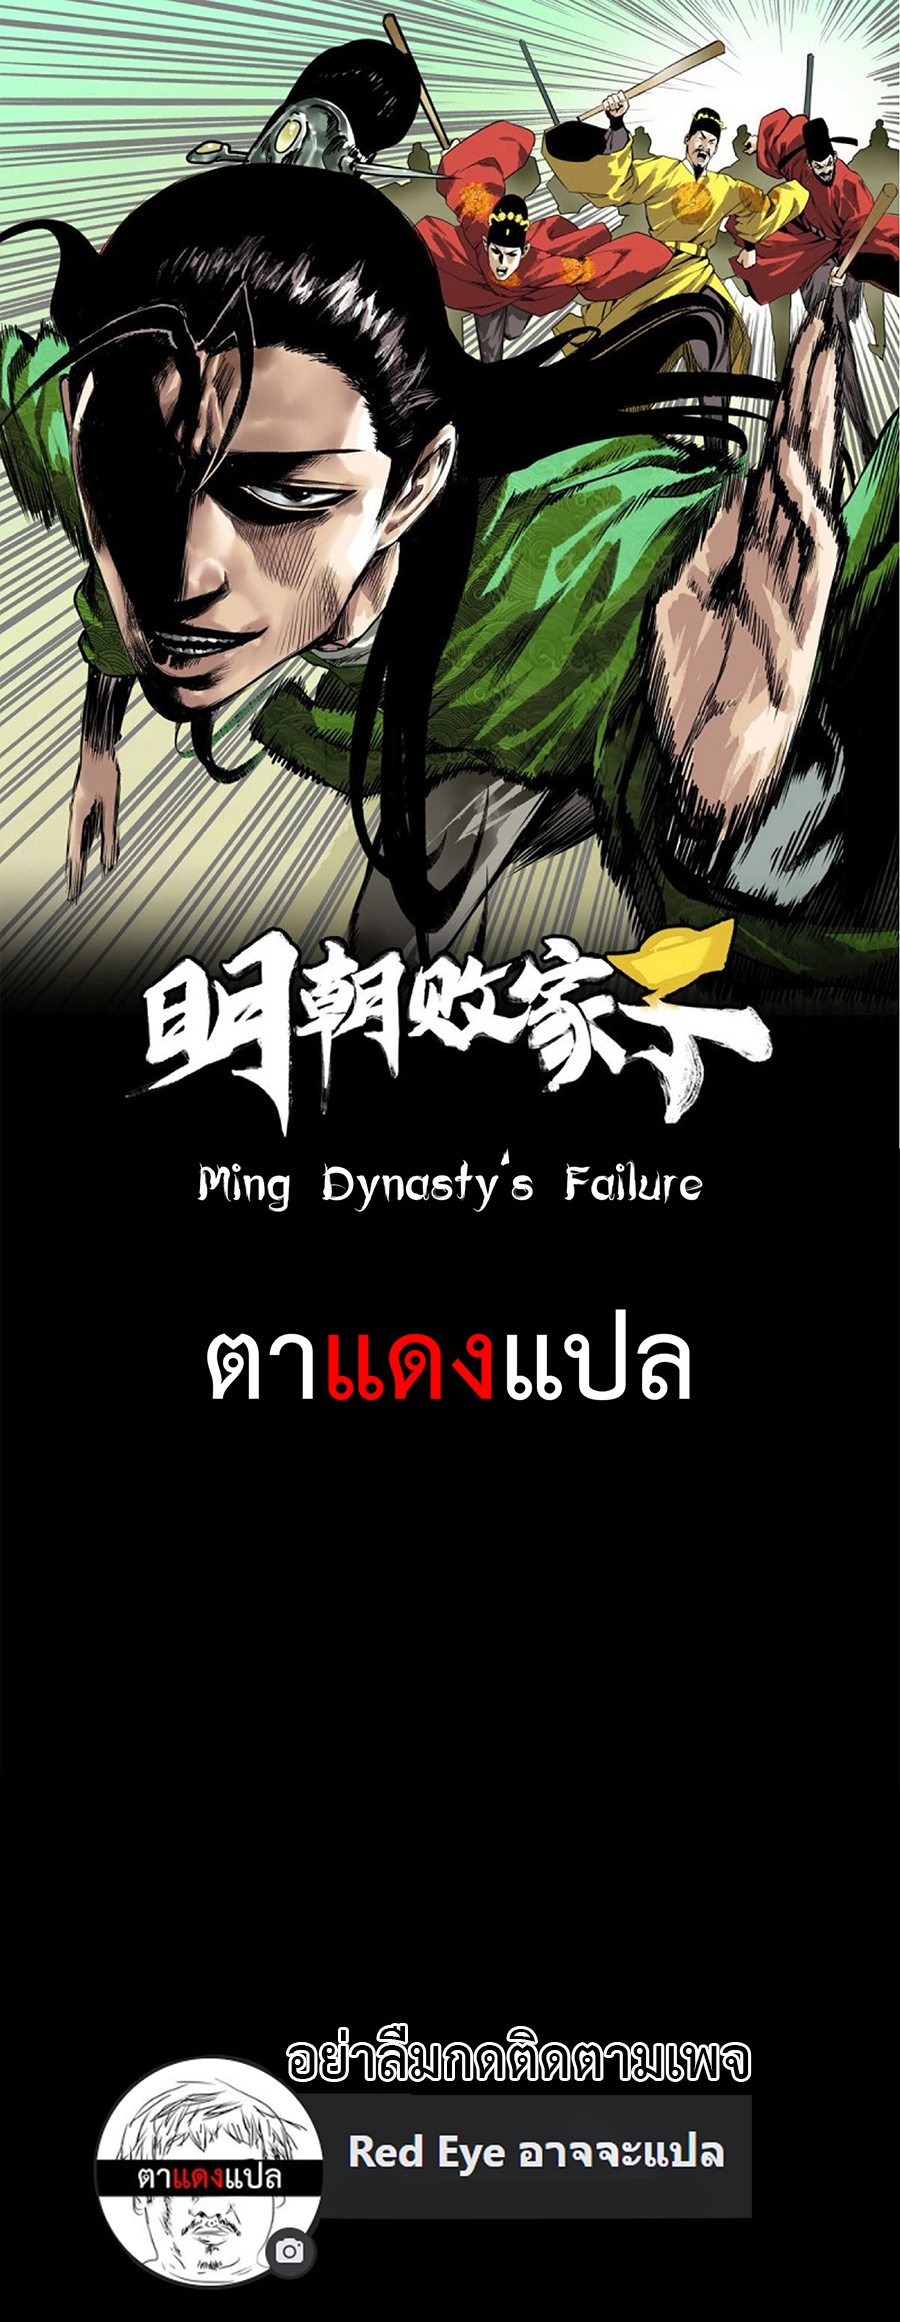 Ming Dynasty's Failure 41 (1)